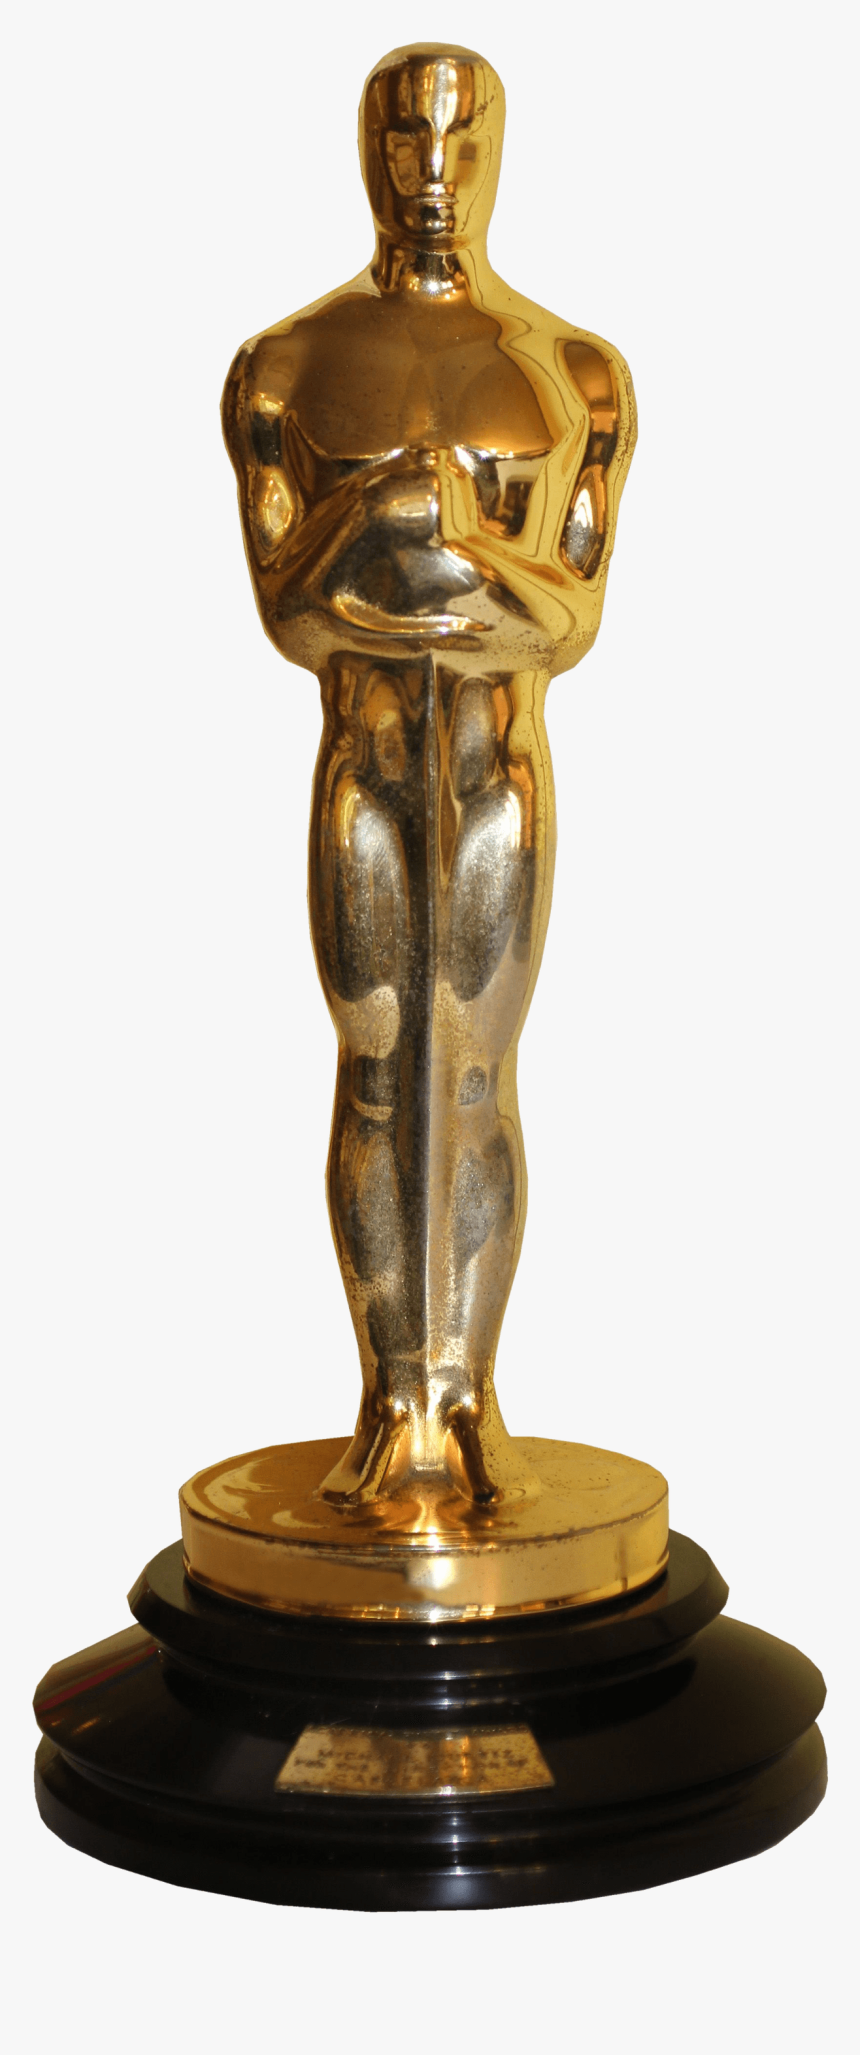 Oscar Academy Award - Steven Spielberg Vs Netflix, HD Png Download, Free Download